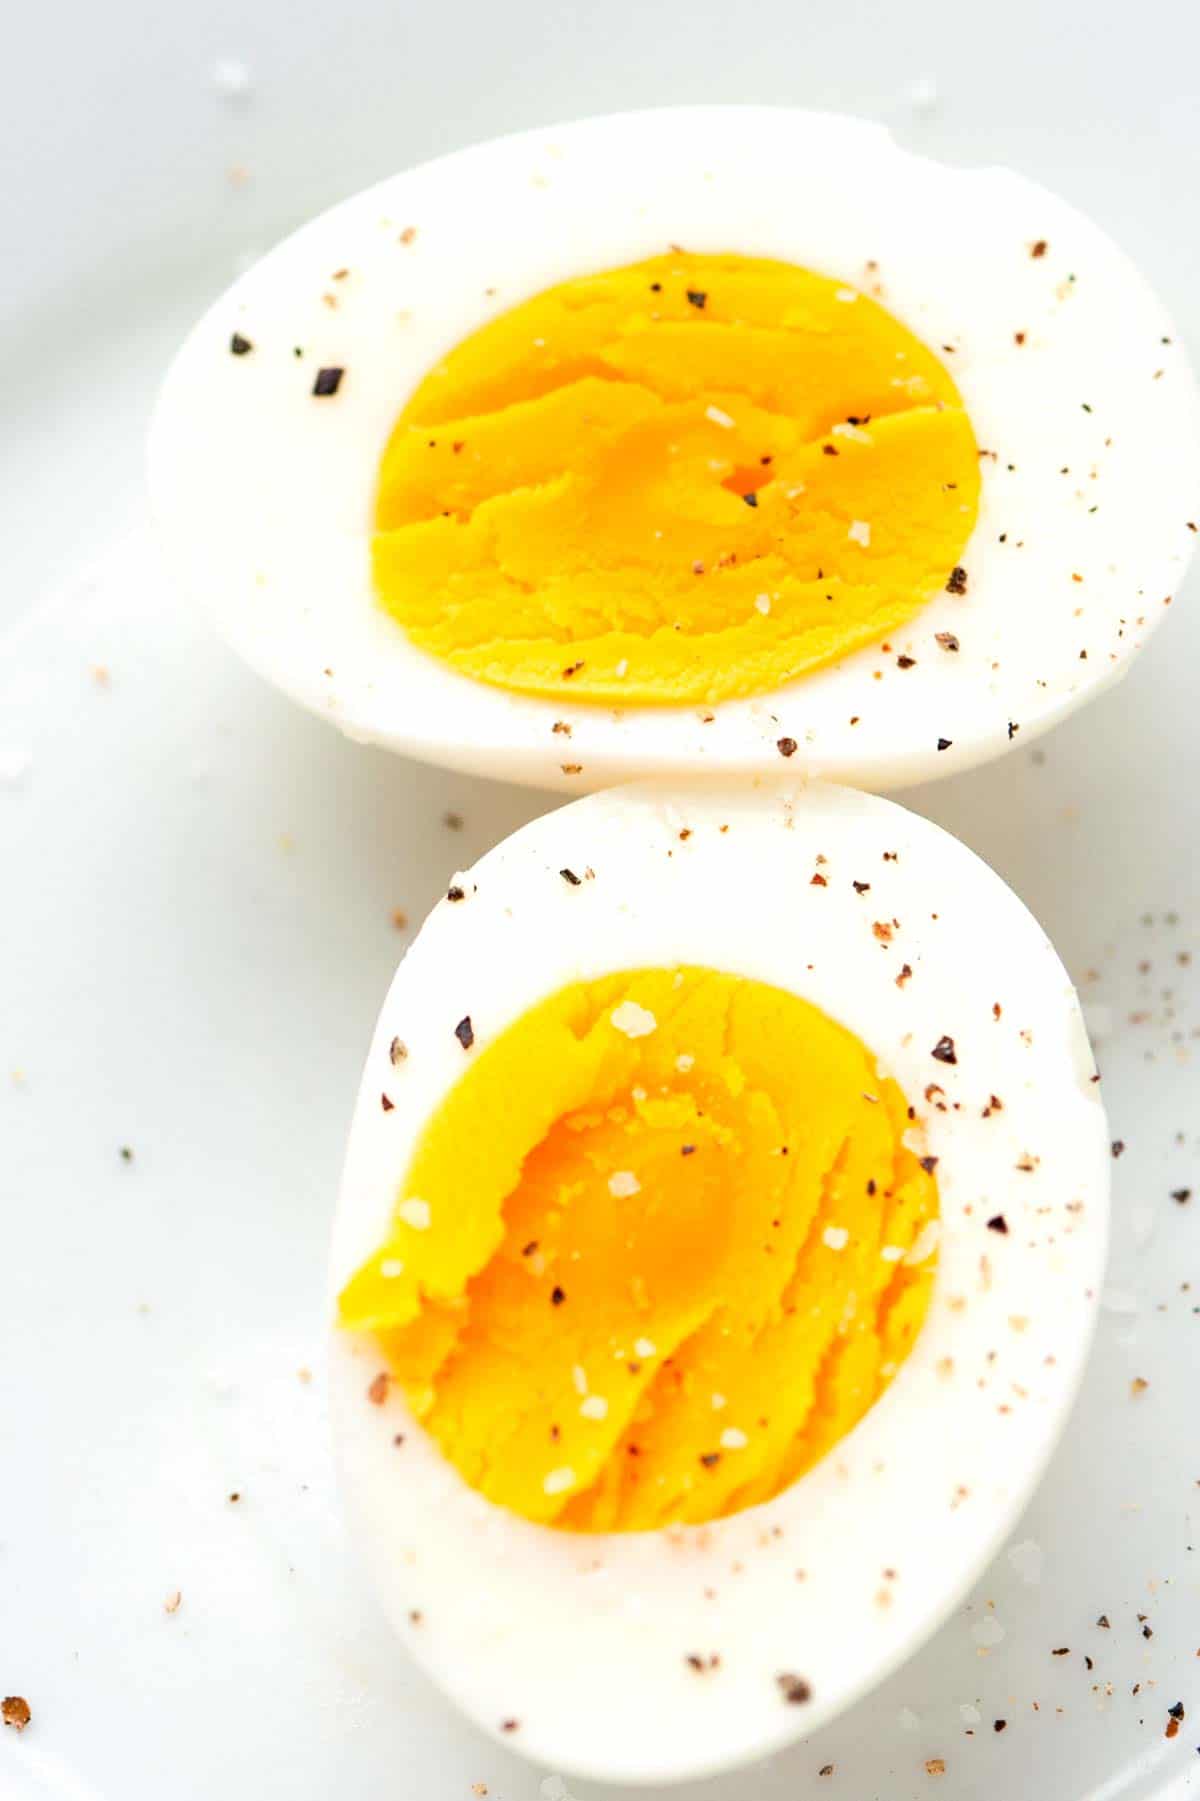 Perfect Hard Boiled Eggs